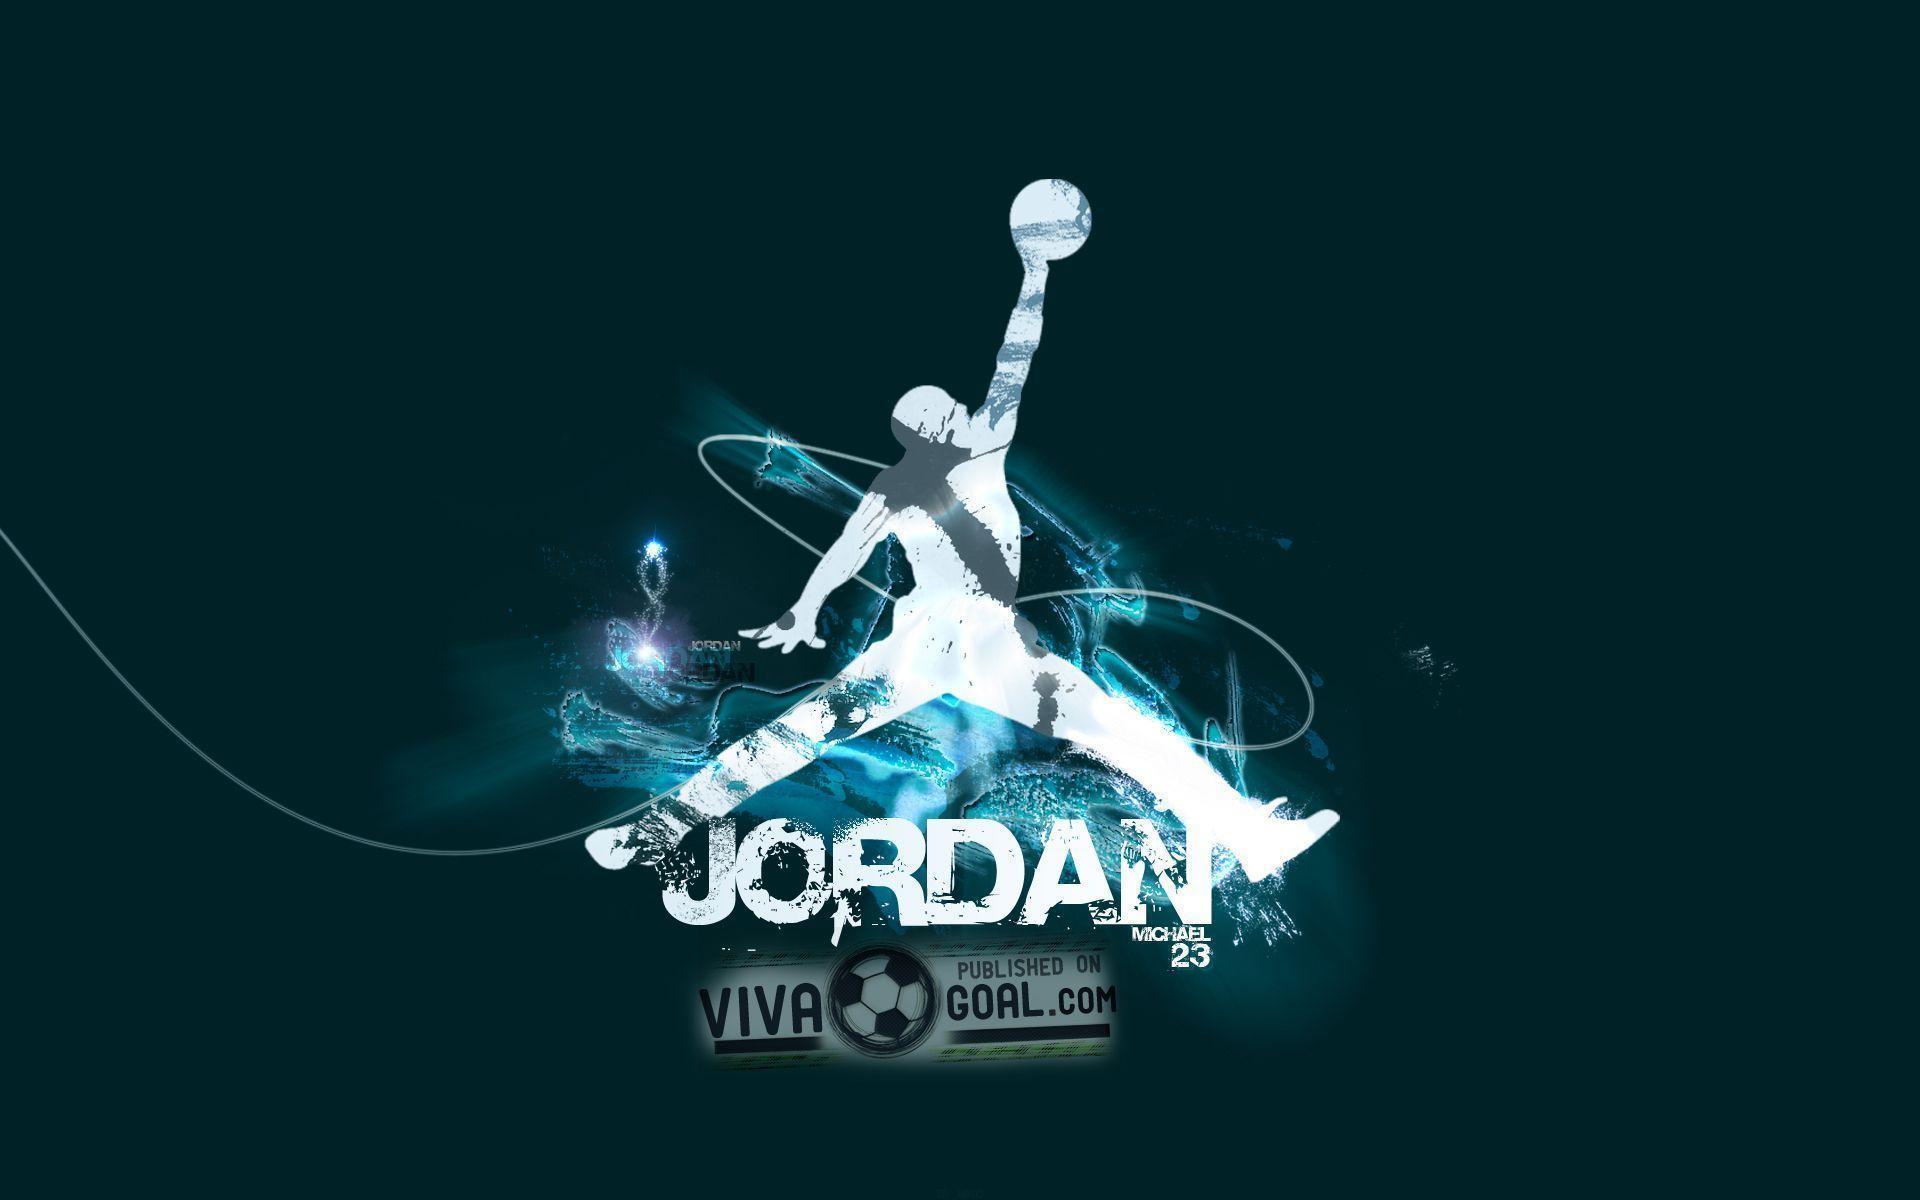 Michael Jordan Wallpaper Background in HD Quality